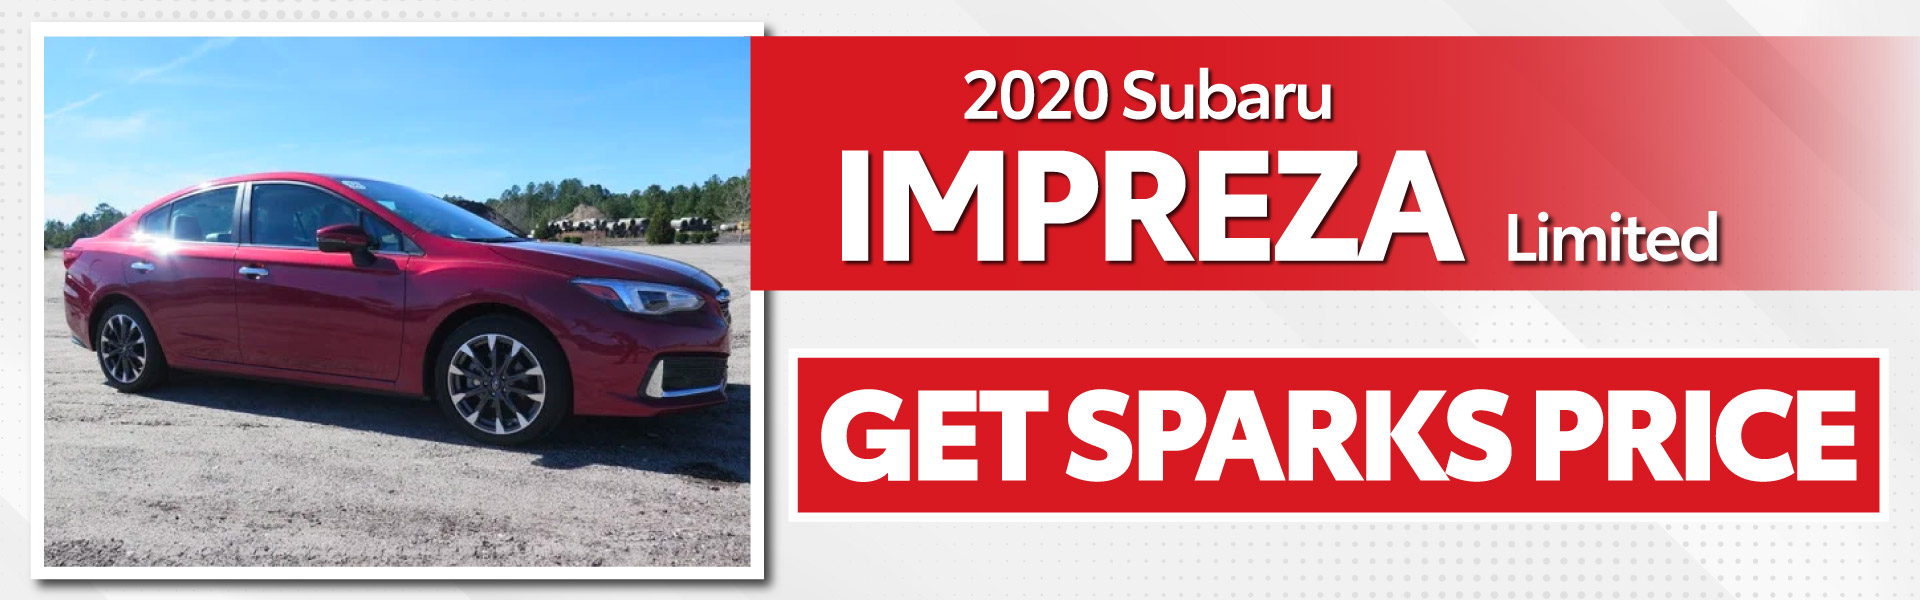 2020 Subaru Impreza Limited - Get Sparks Price